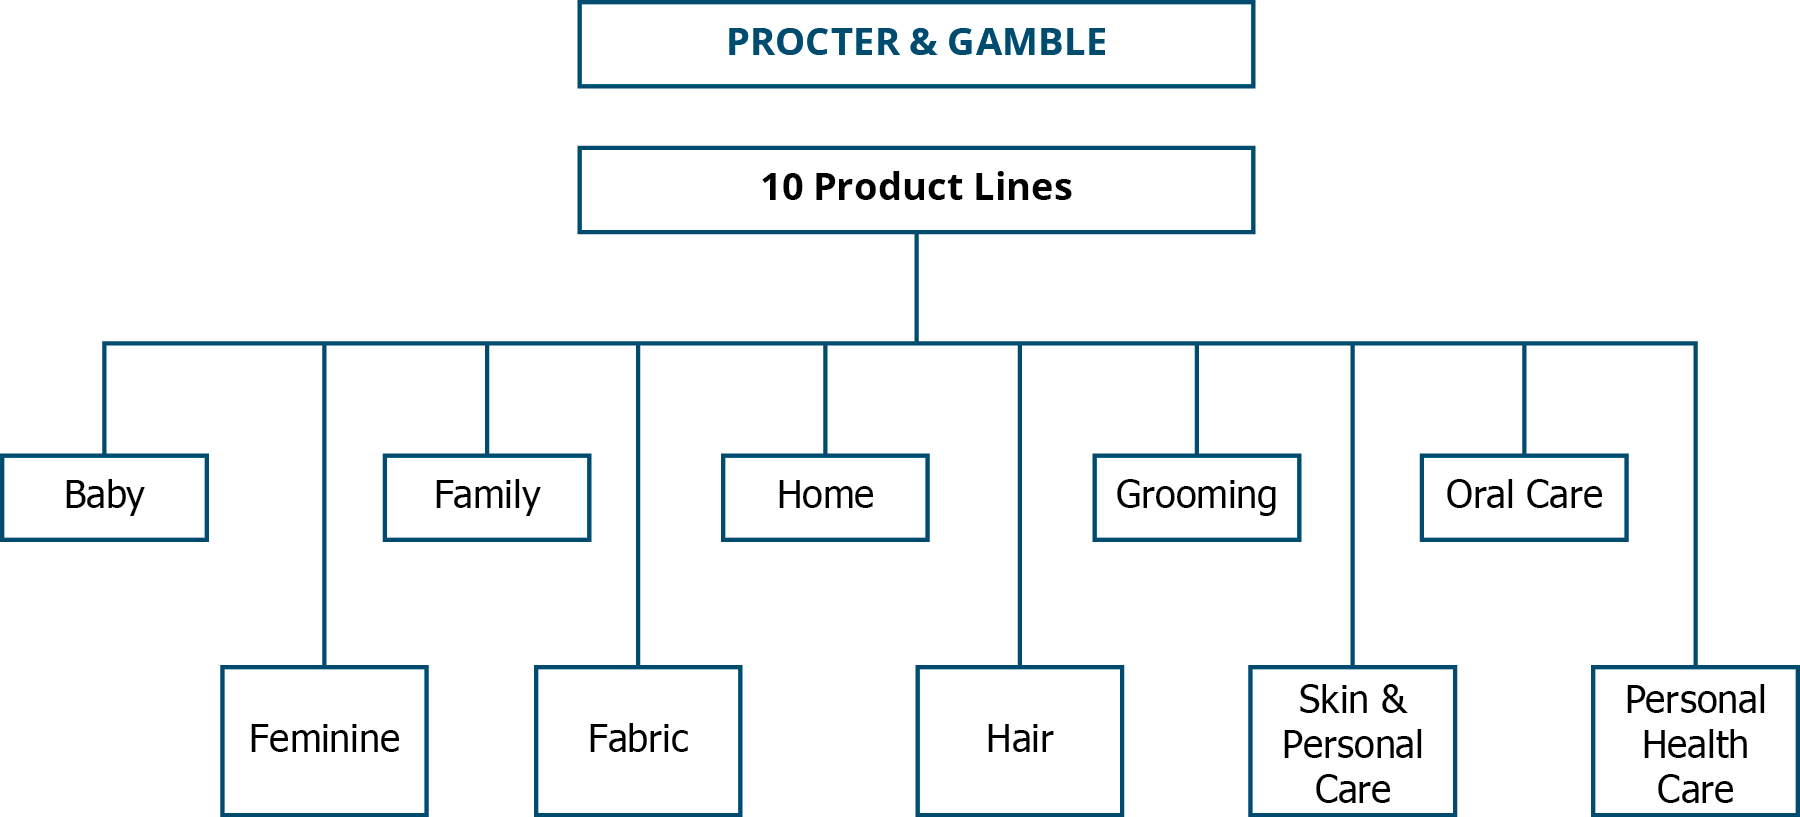 Procter & Gamble 的组织结构图显示了 10 个产品线：婴儿、女性、家庭、面料、家居、头发、美容、皮肤和个人护理、口腔护理和个人保健。